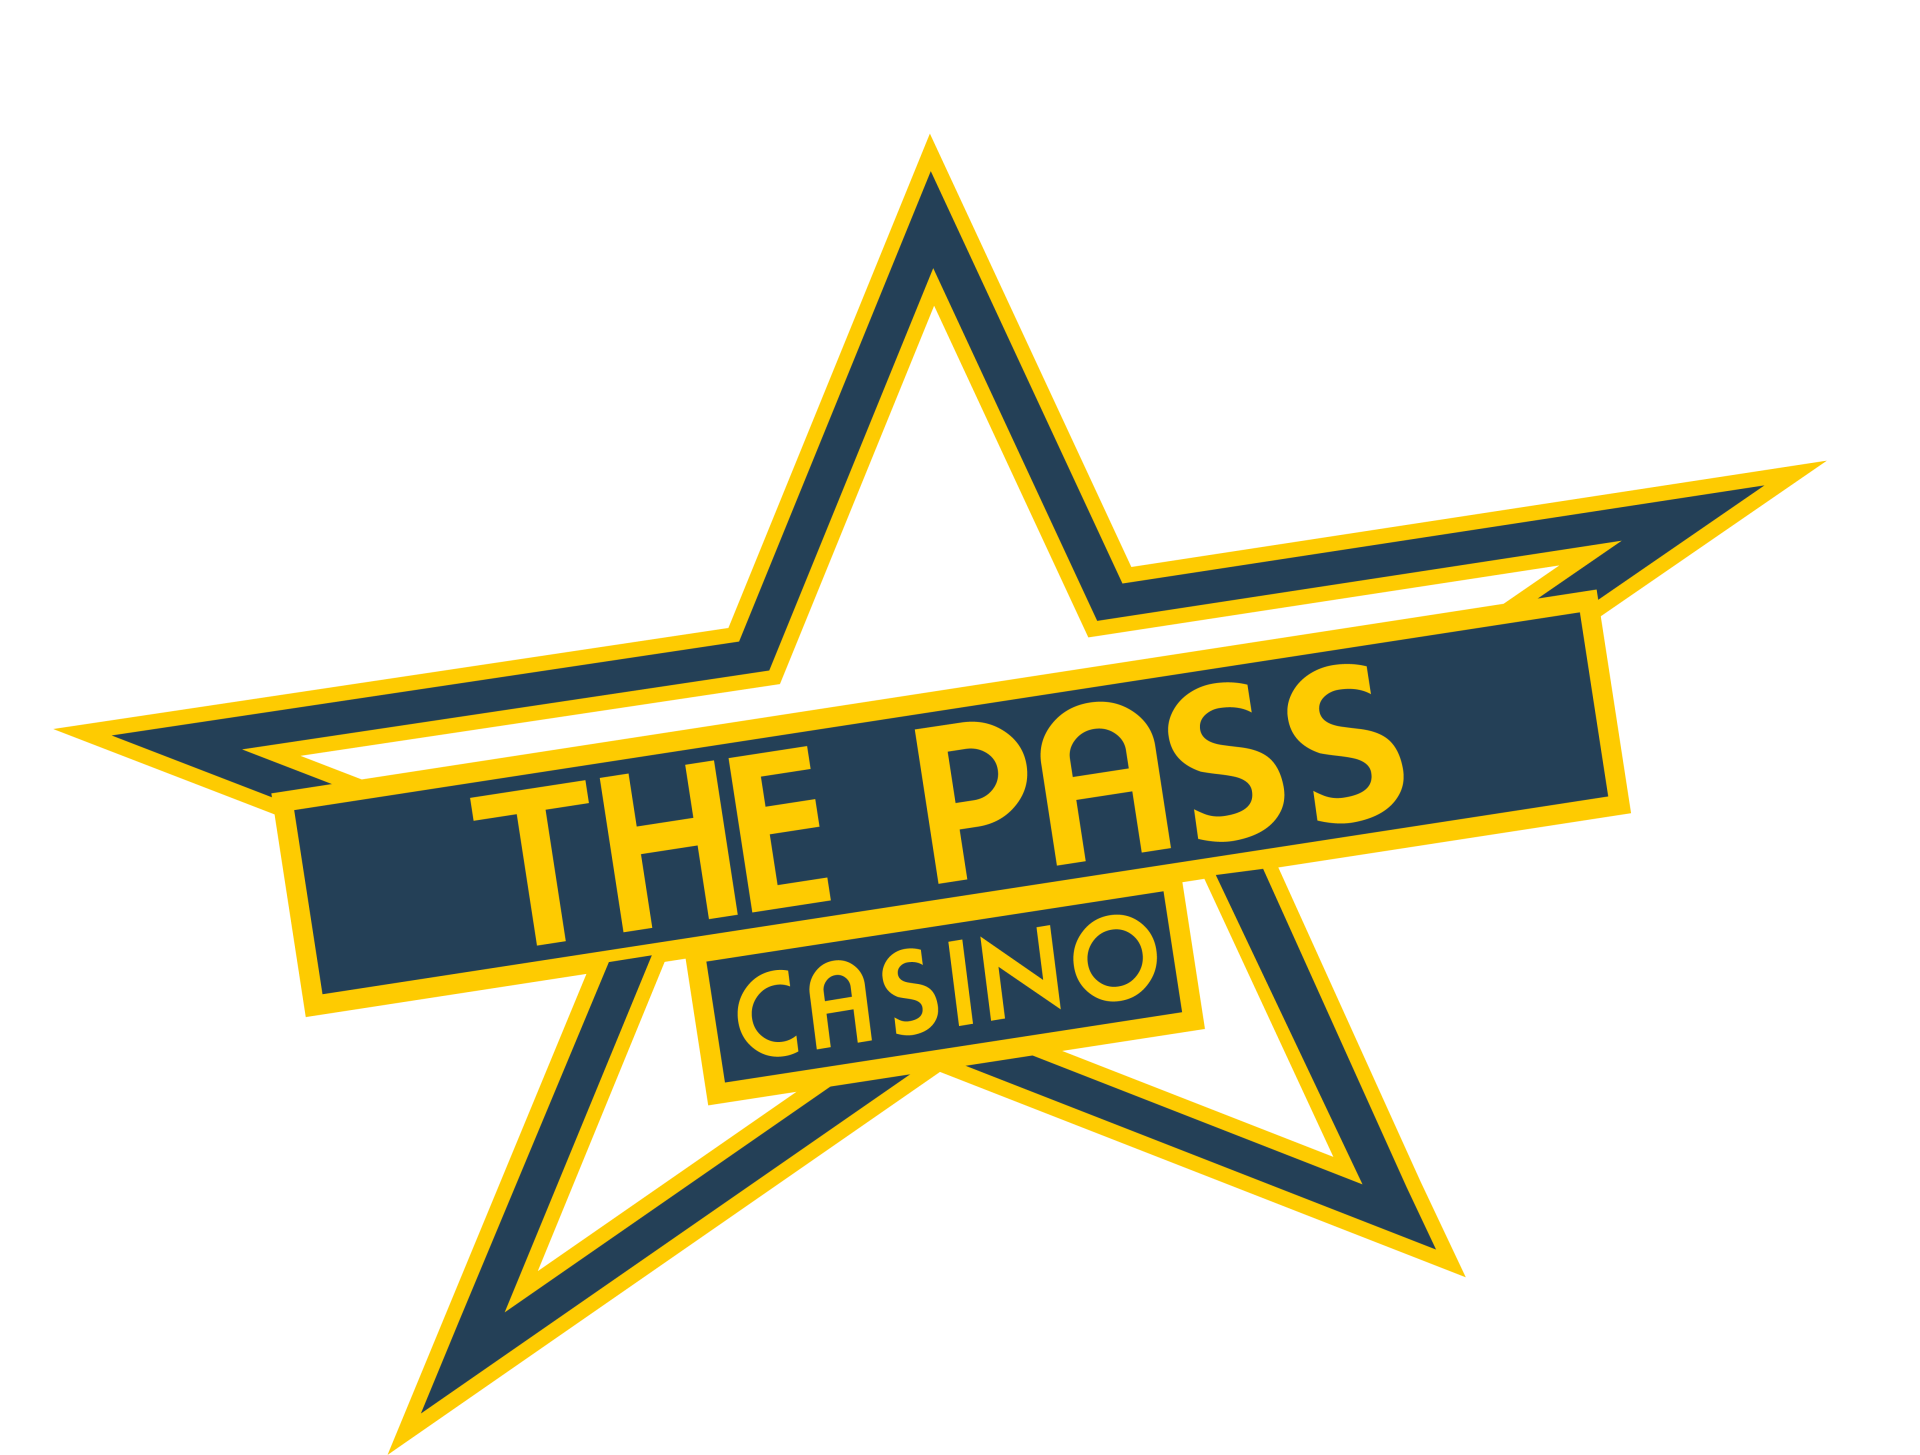 The PASS Single Final Logo with Casino MODERNA FONT